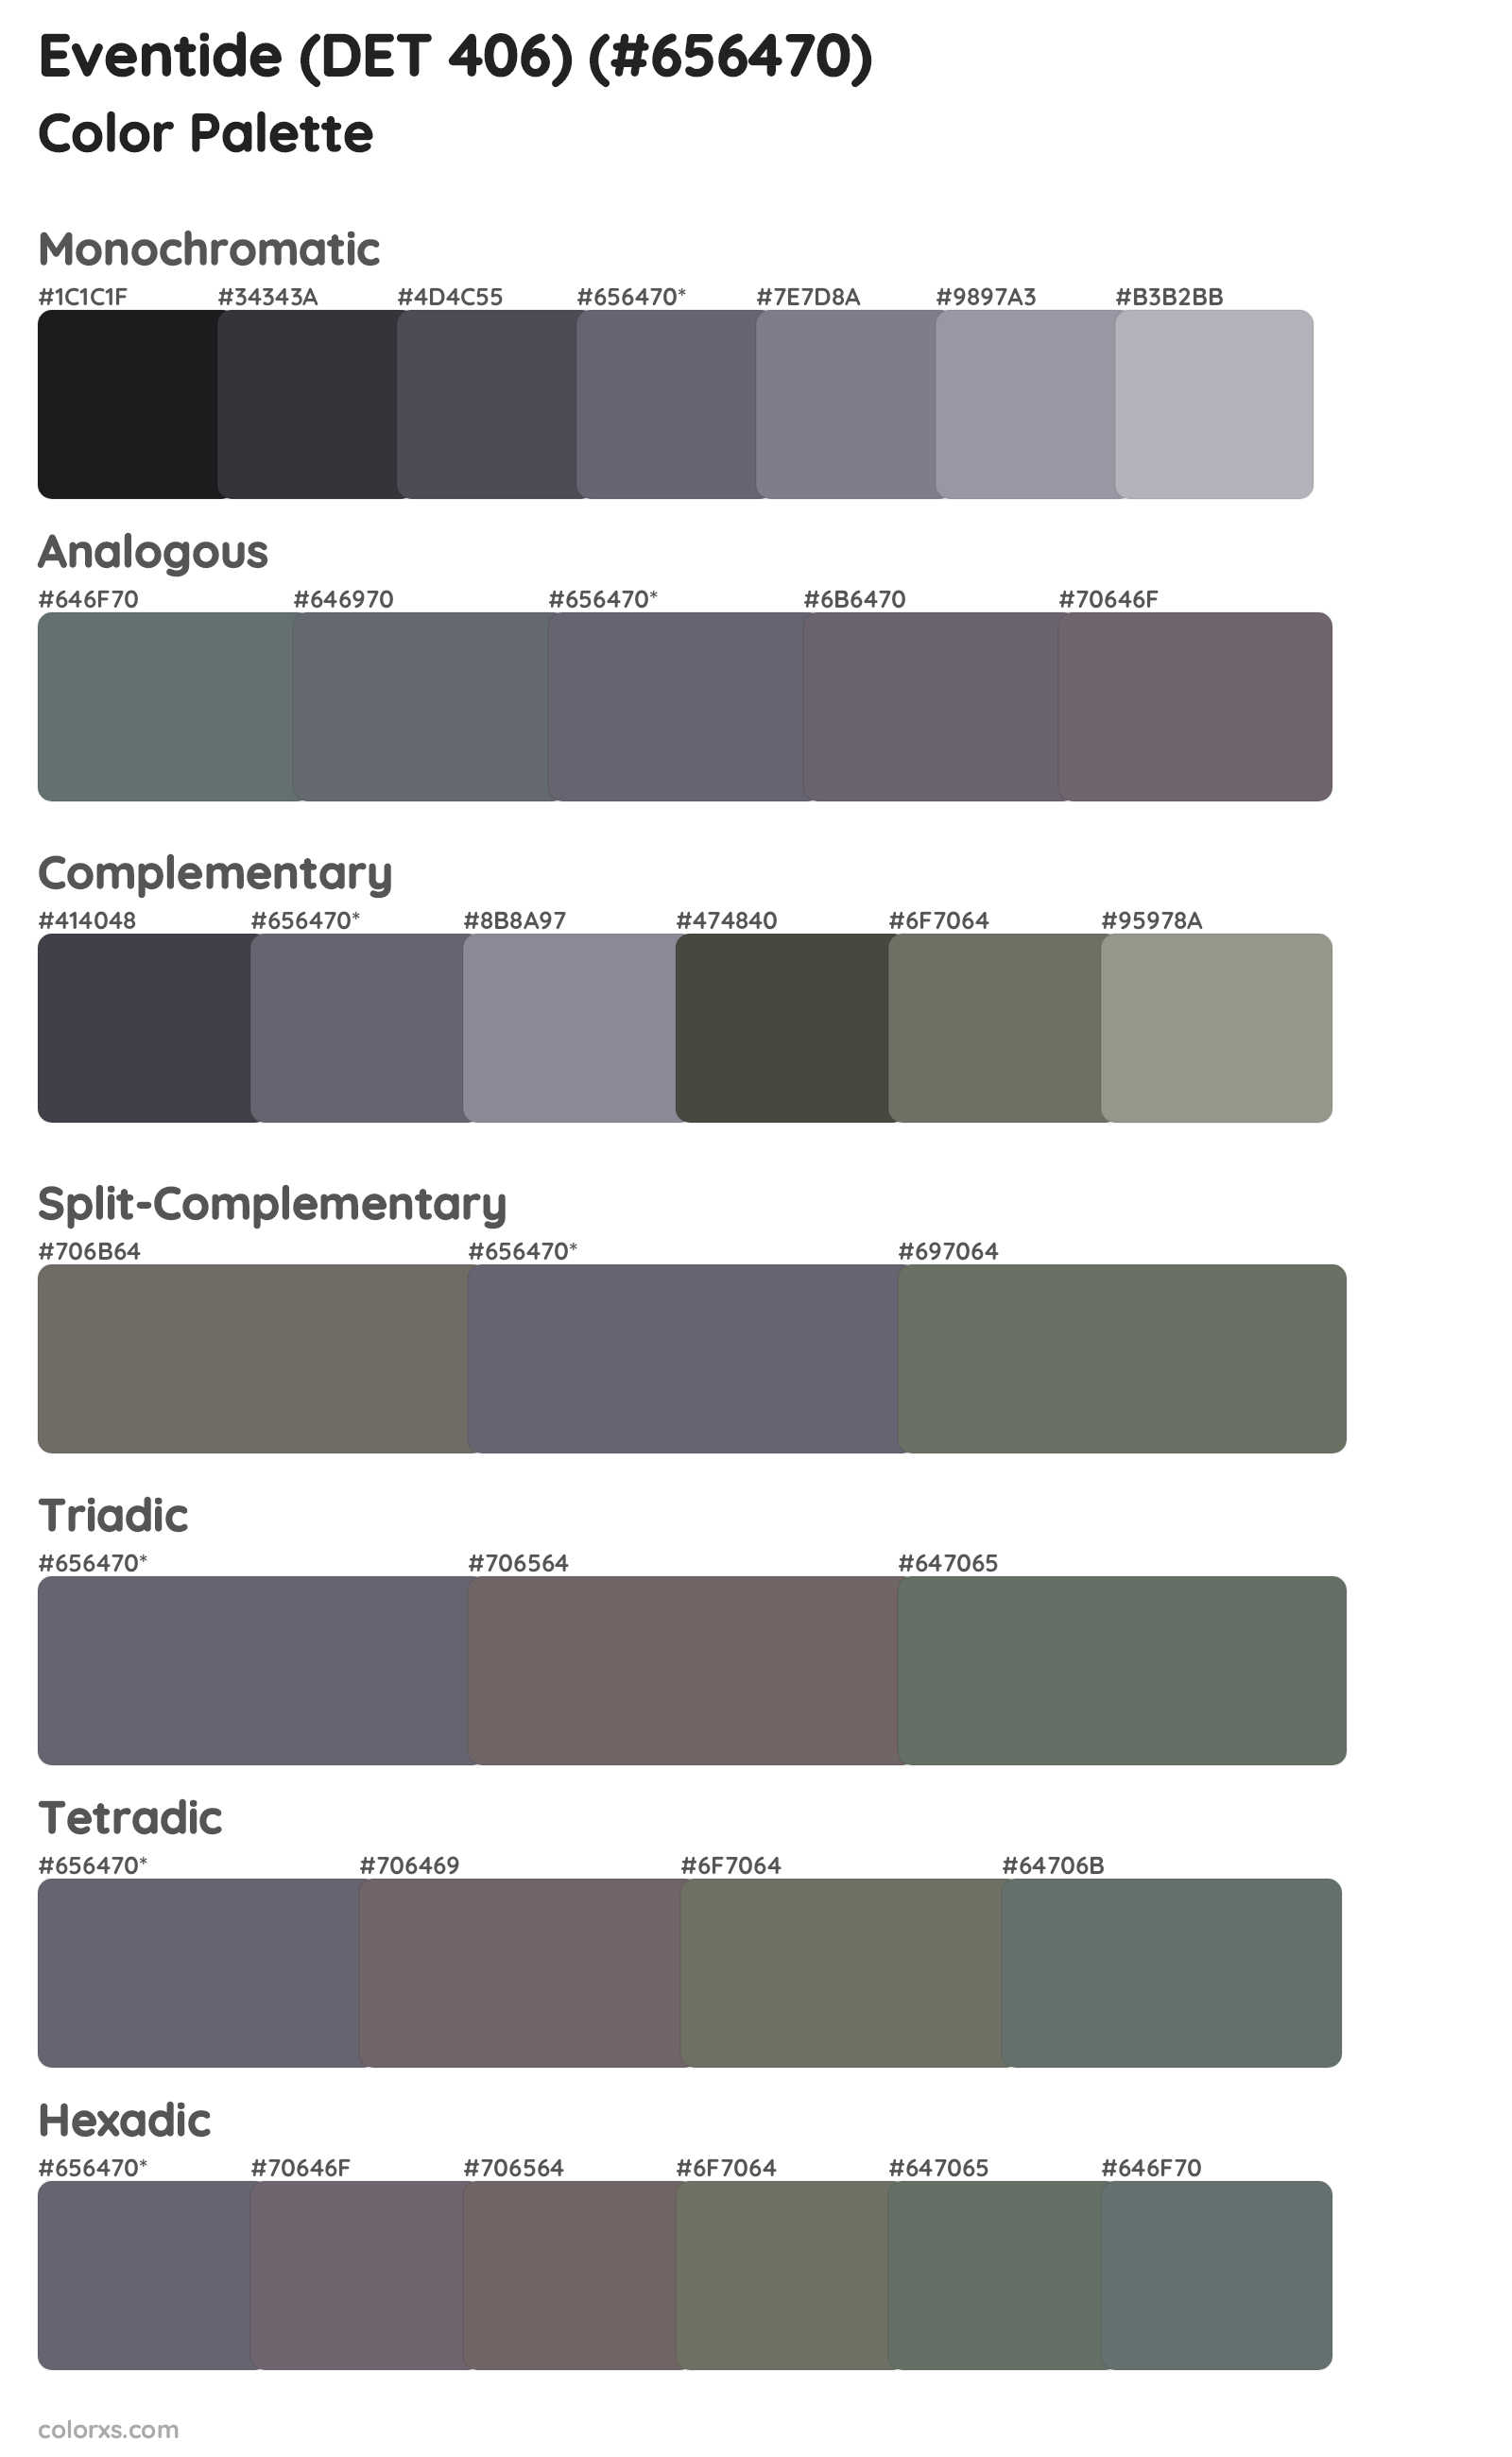 Eventide (DET 406) Color Scheme Palettes